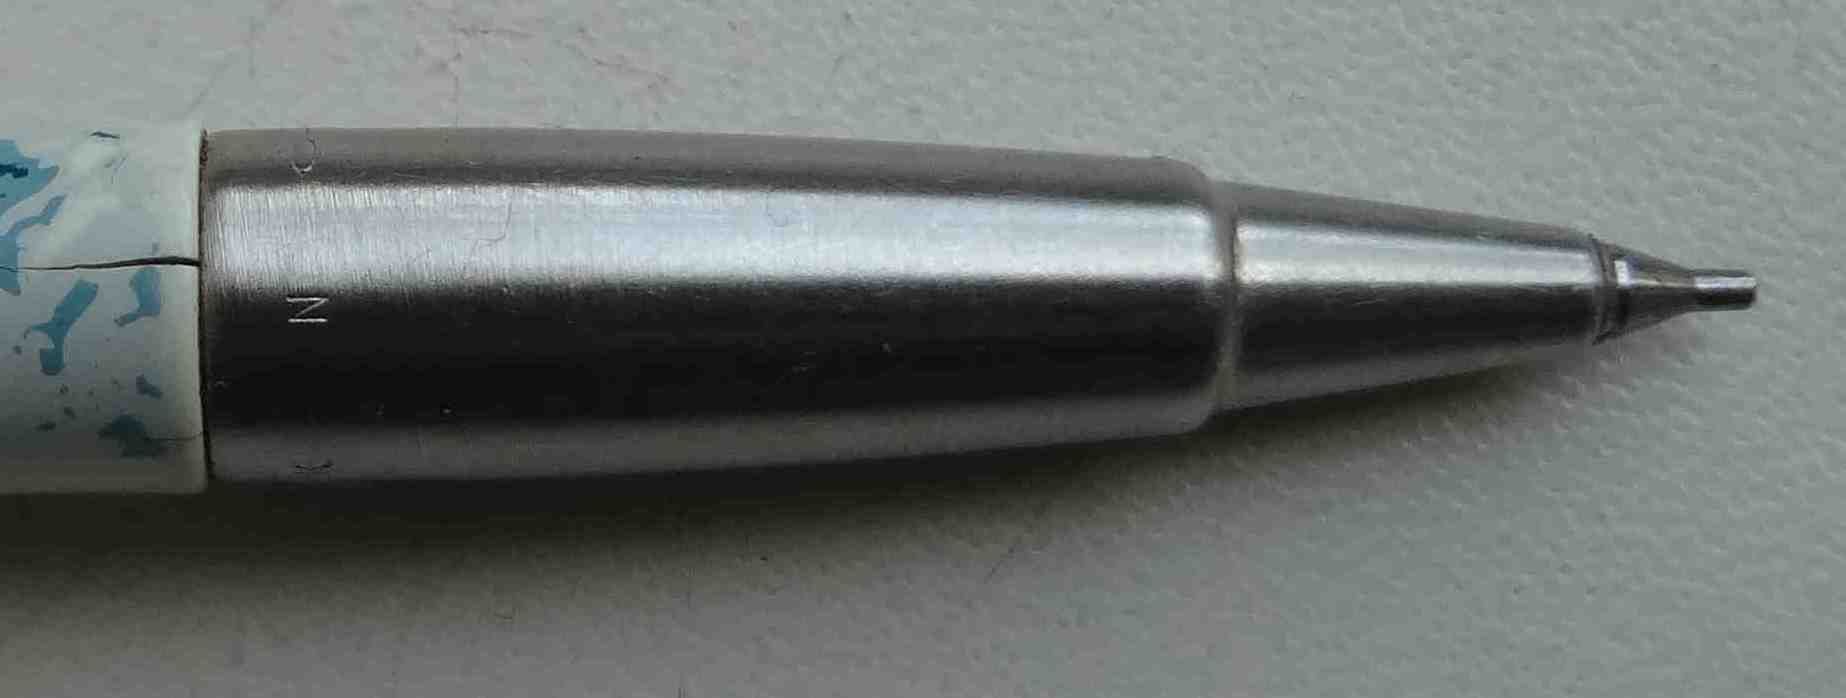 Механический карандаш Parker Gillette Паркер, коллекционный